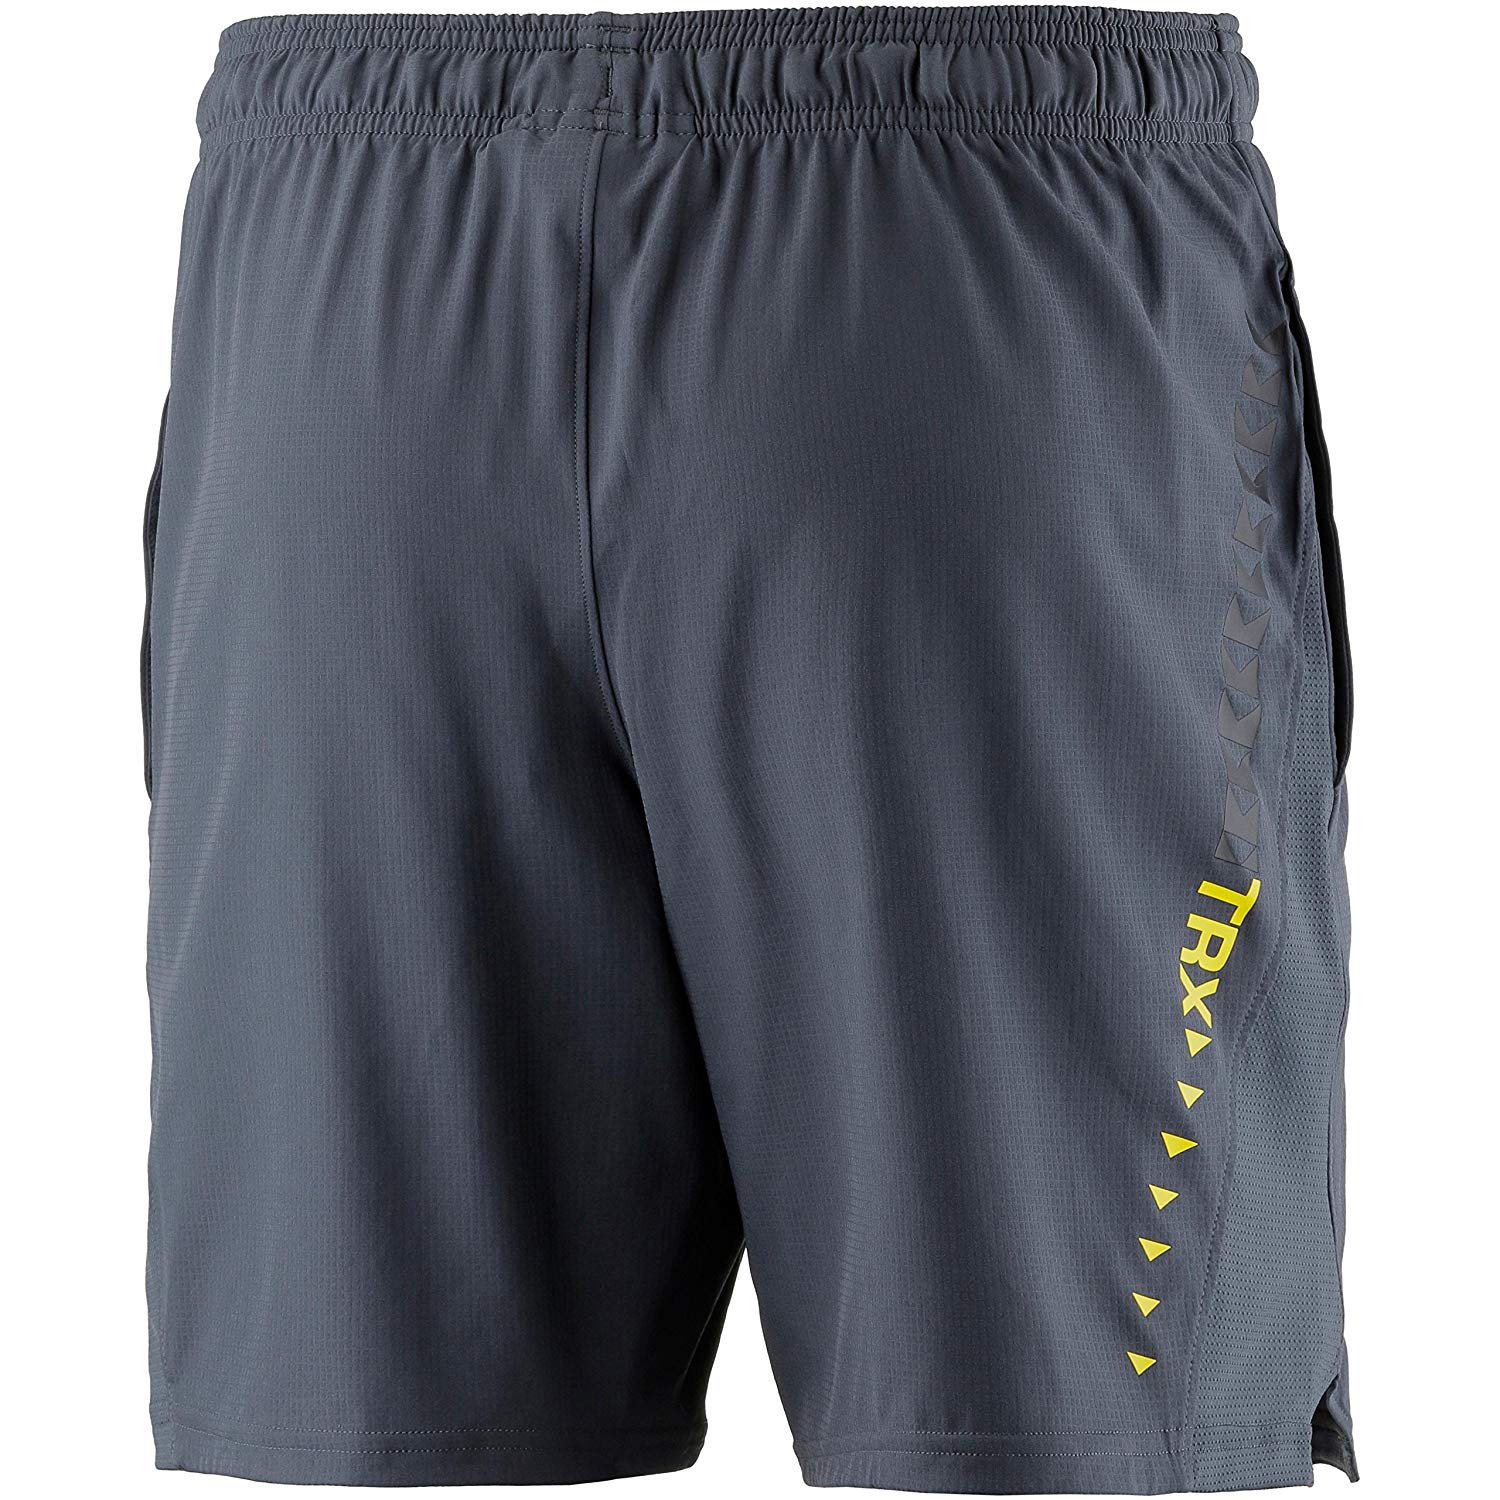 Shorts -  under armour UA x TRX Cage Shorts 3761